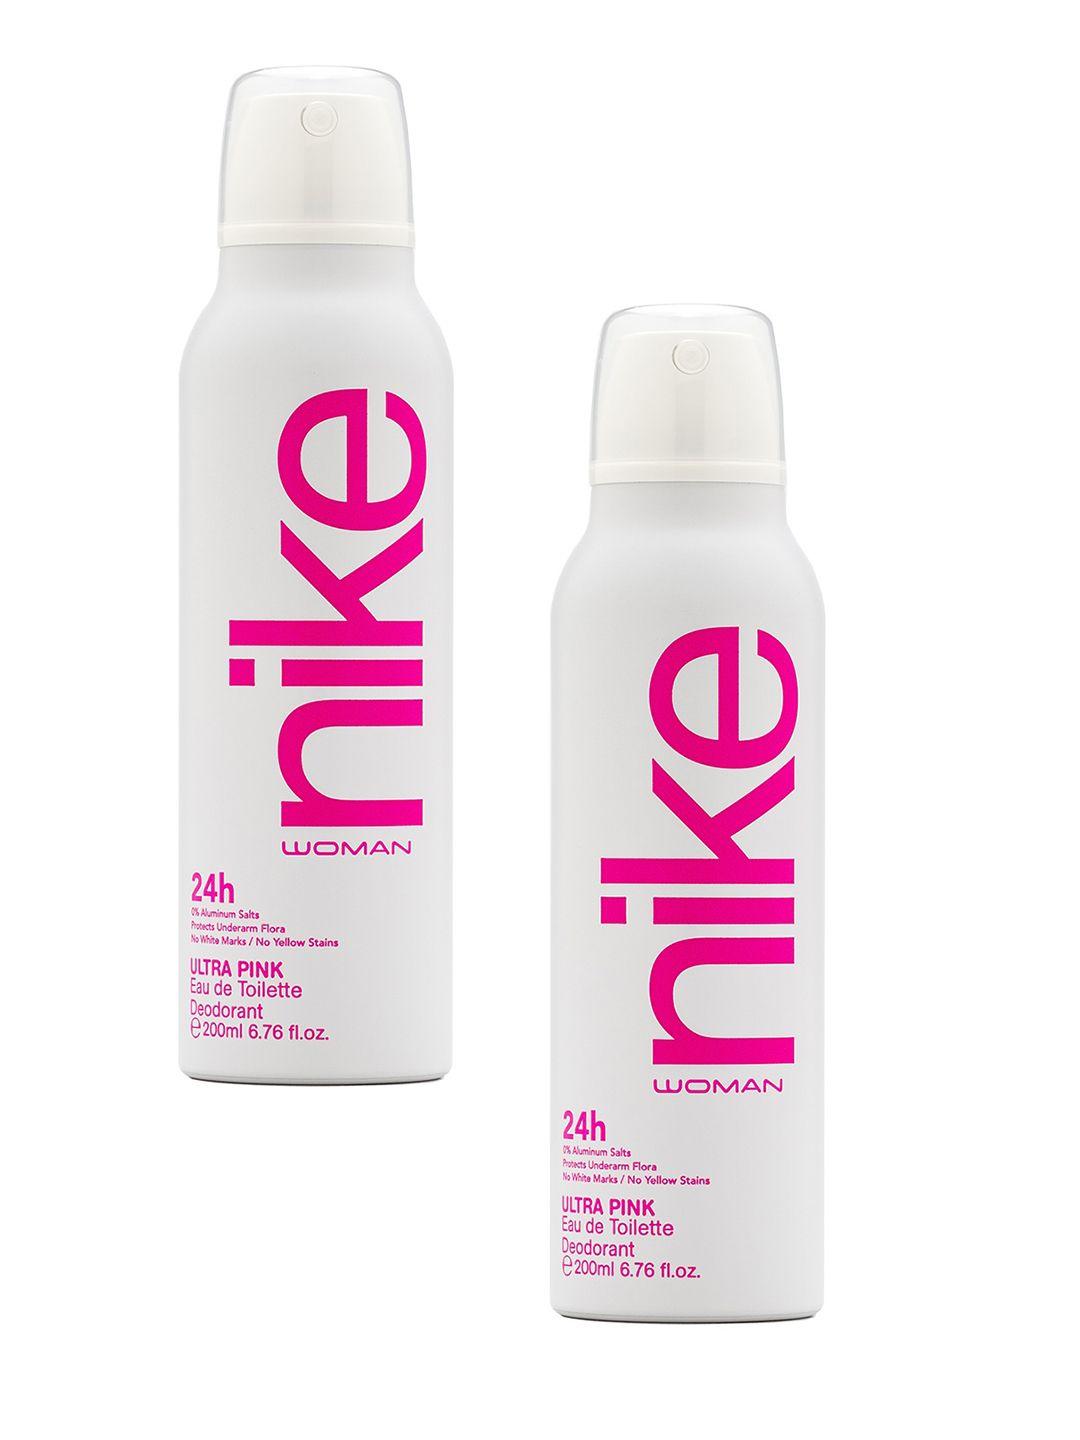 nike woman pack of 2 ultra pink deodorant- 200ml